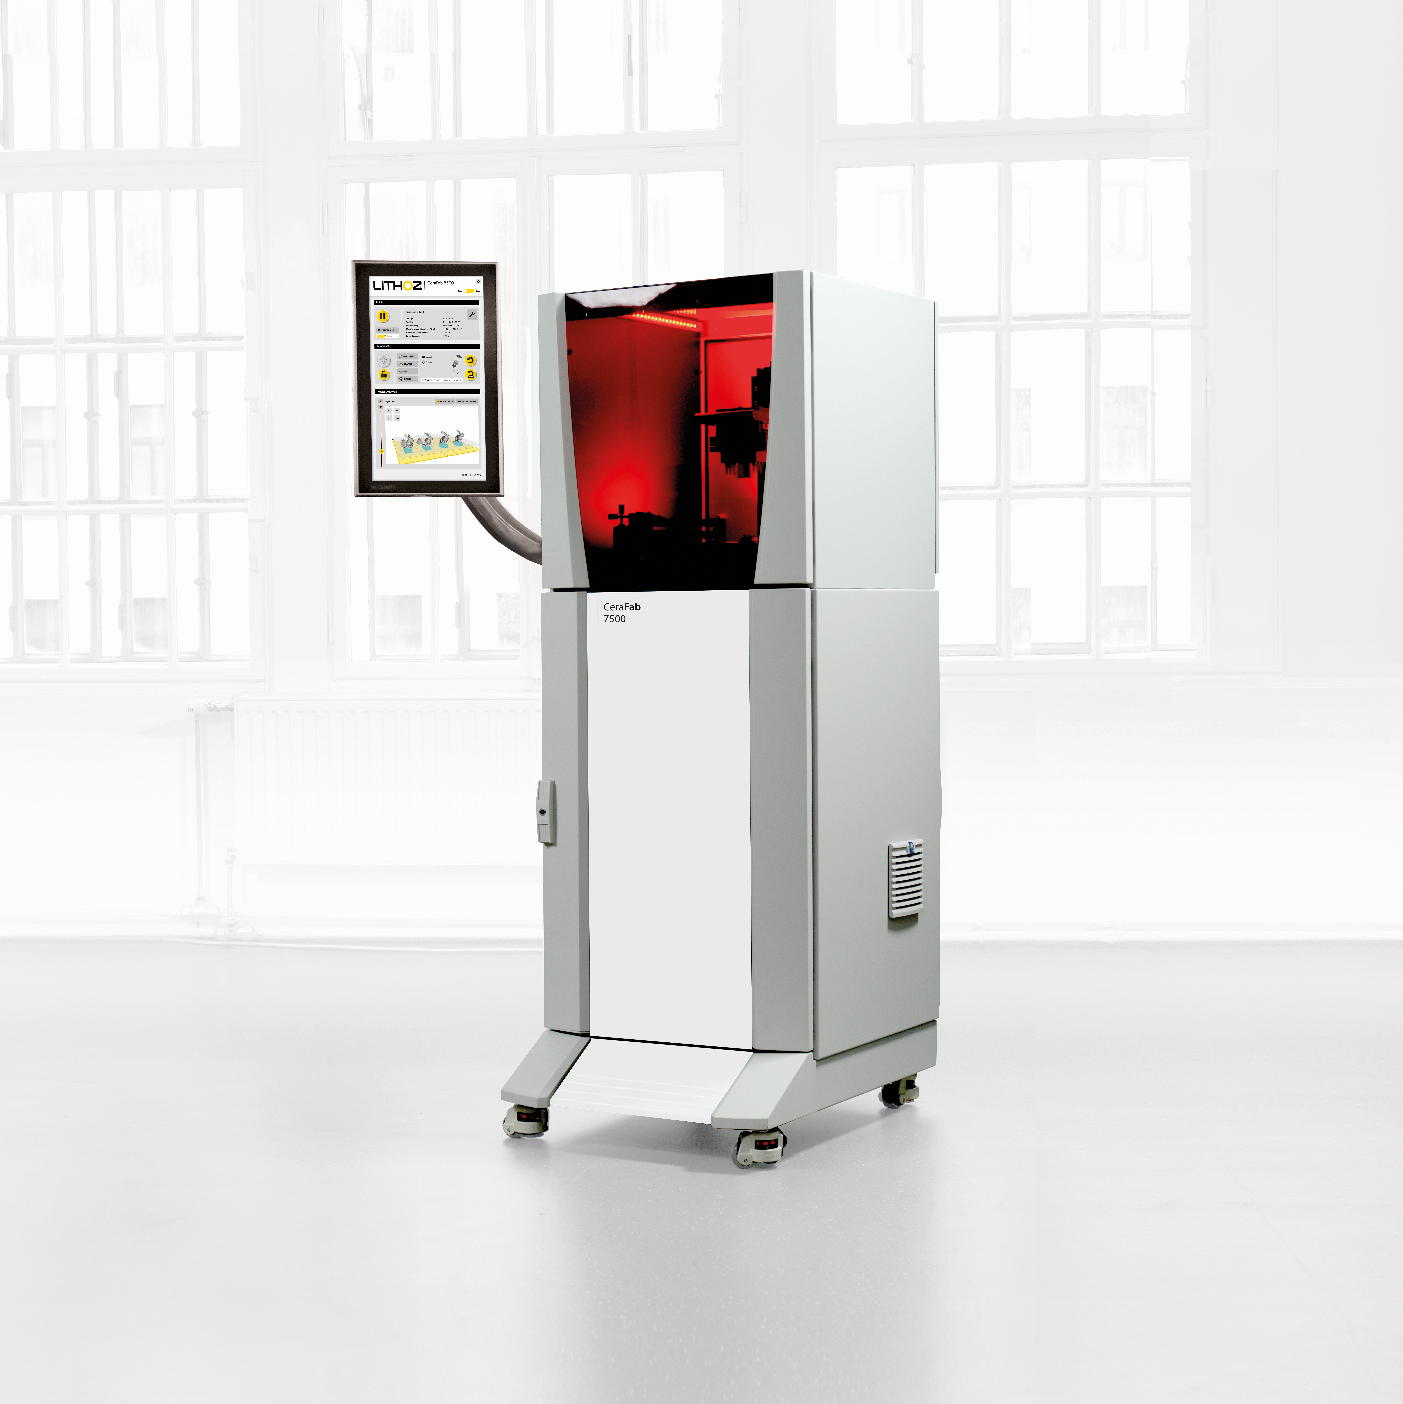 Photo of the CeraFab 7500 3D printer